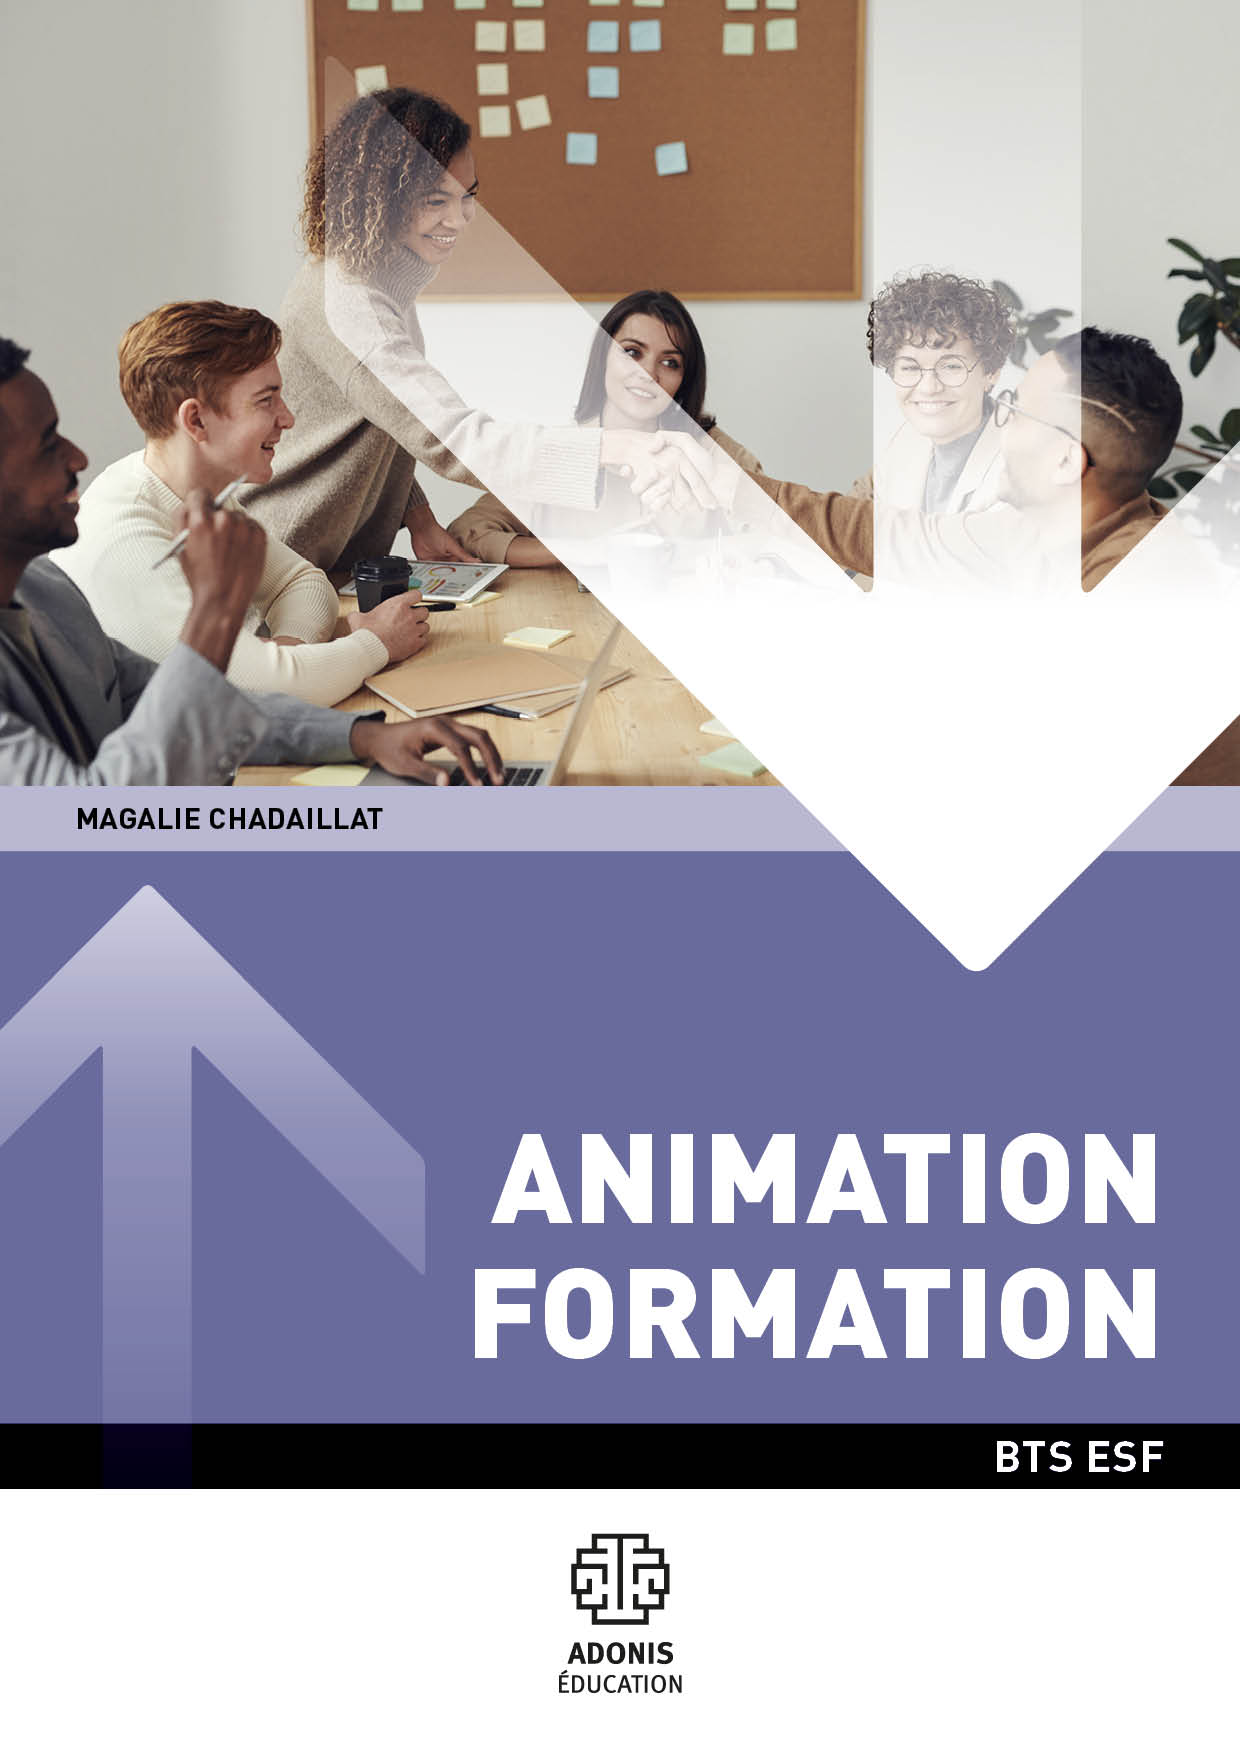 BTS ESF - Animation formation